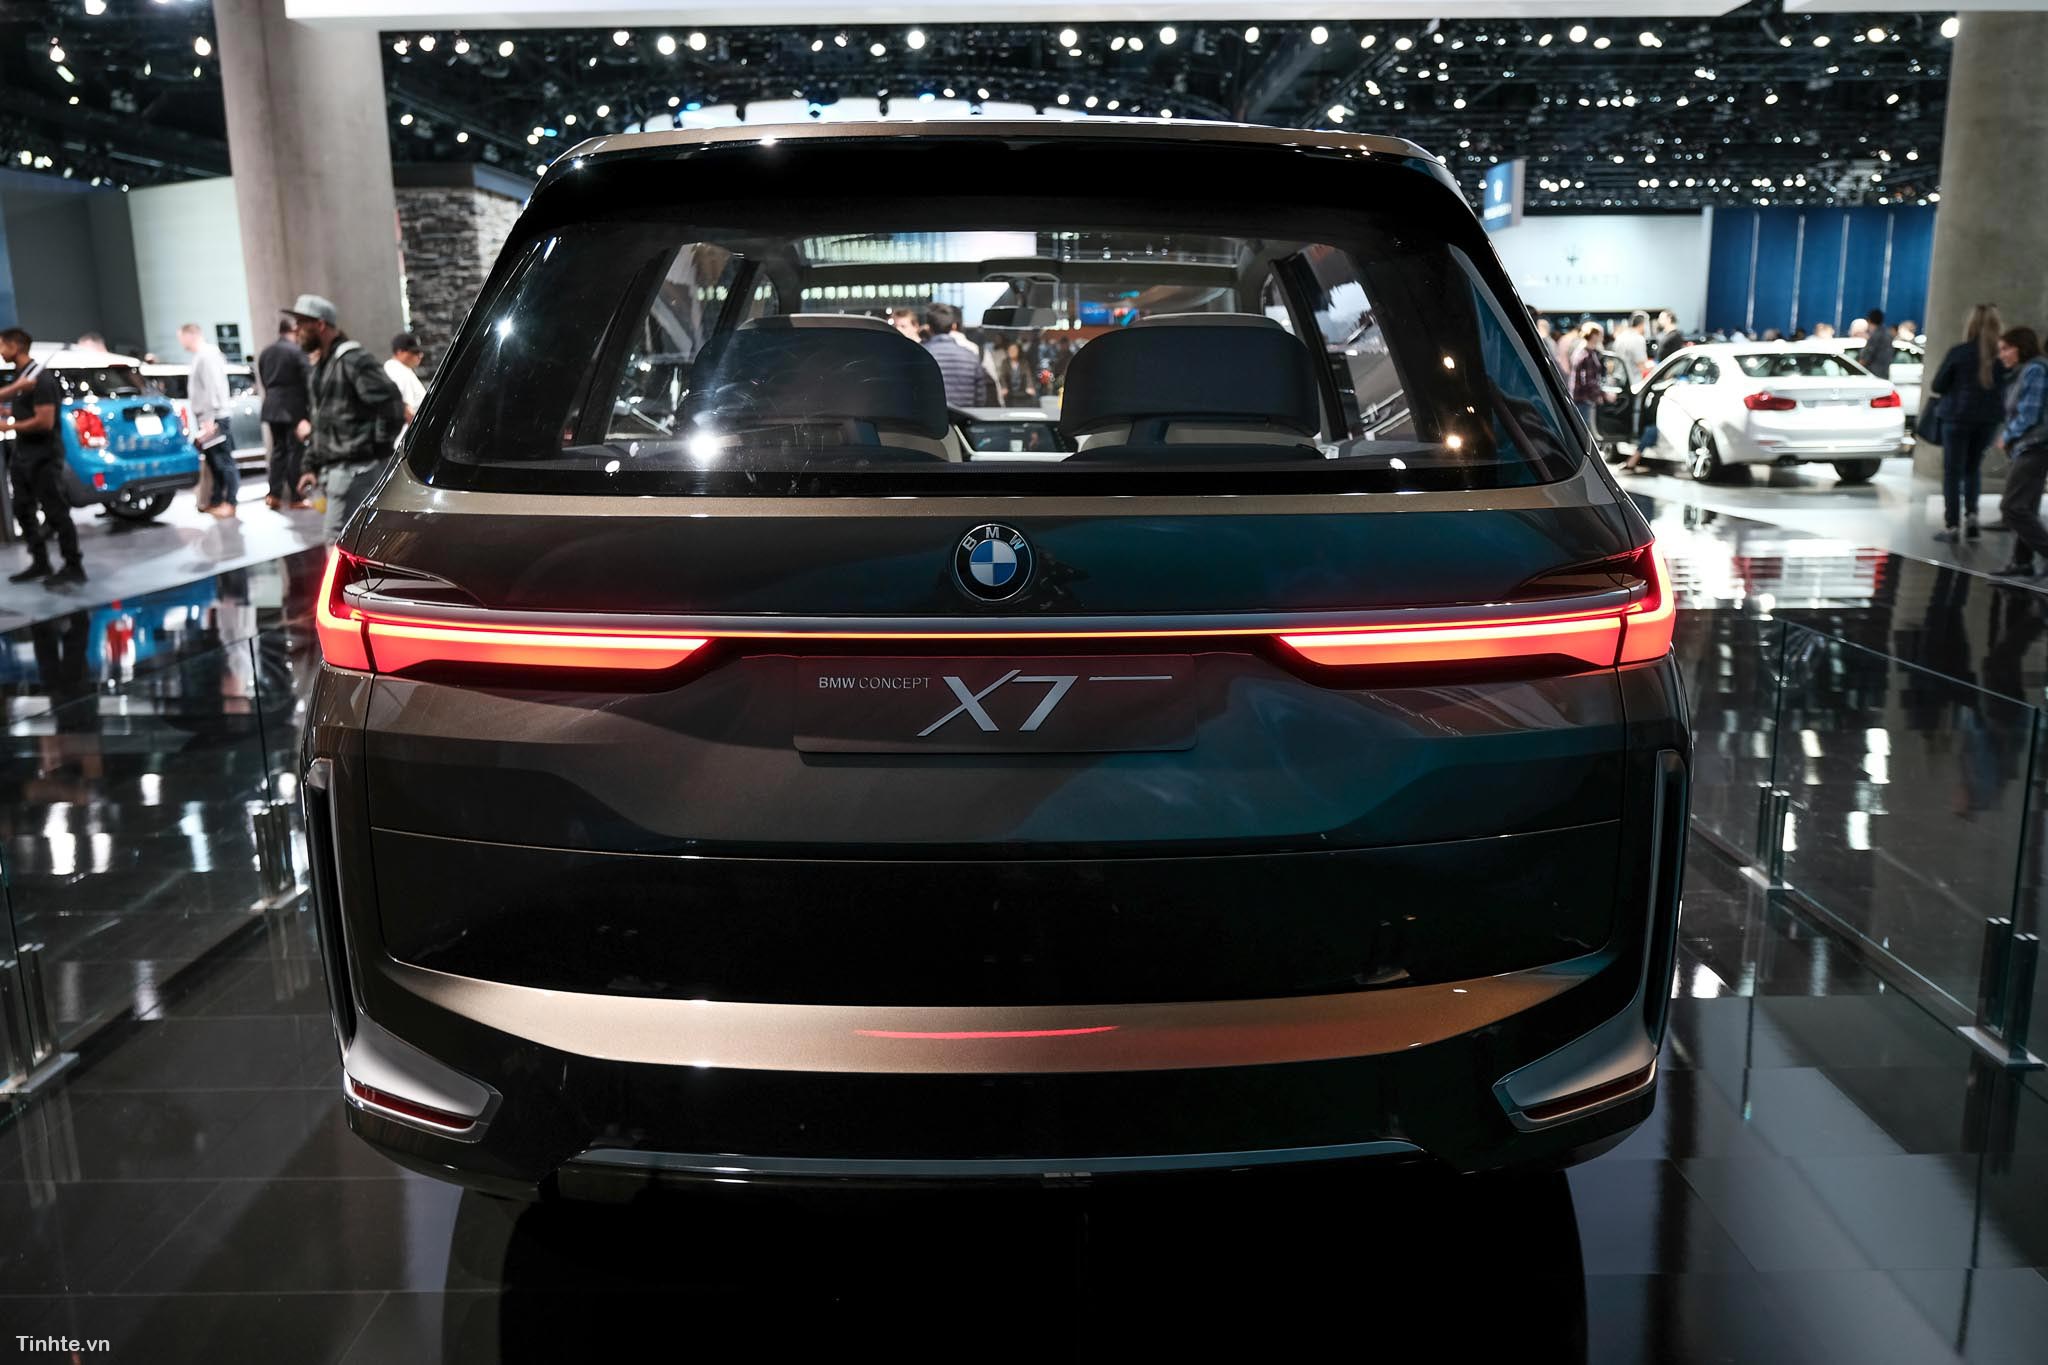 BMW_concept_X7_xe.tinhte.vn_6.jpg